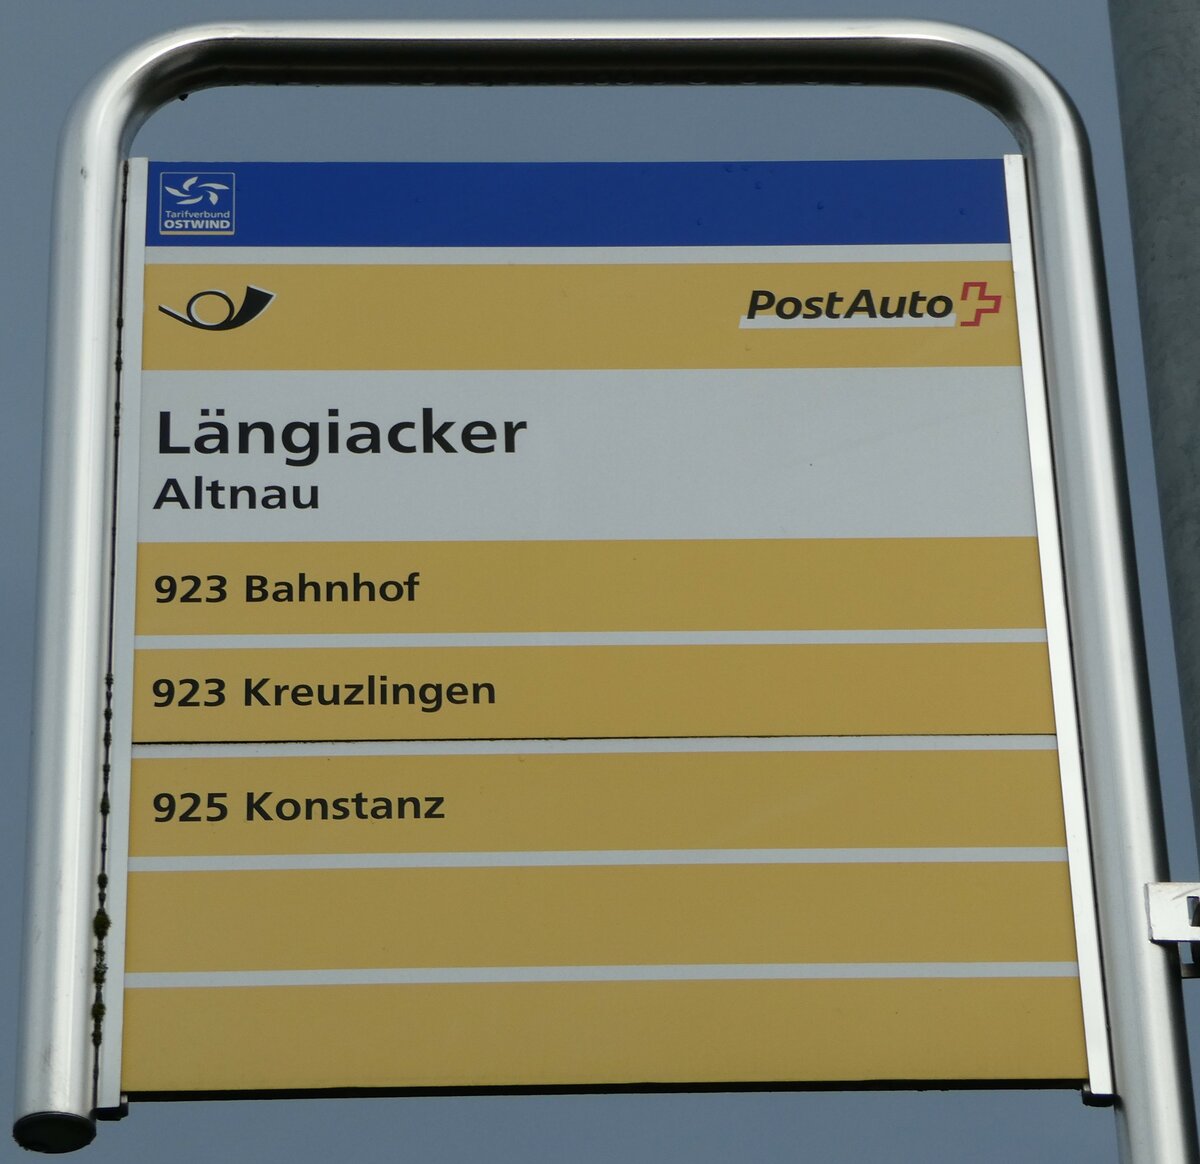 (244'086) - PostAuto-Haltestellenschild - Altnau, Lngiacker - am 21. Dezember 2022